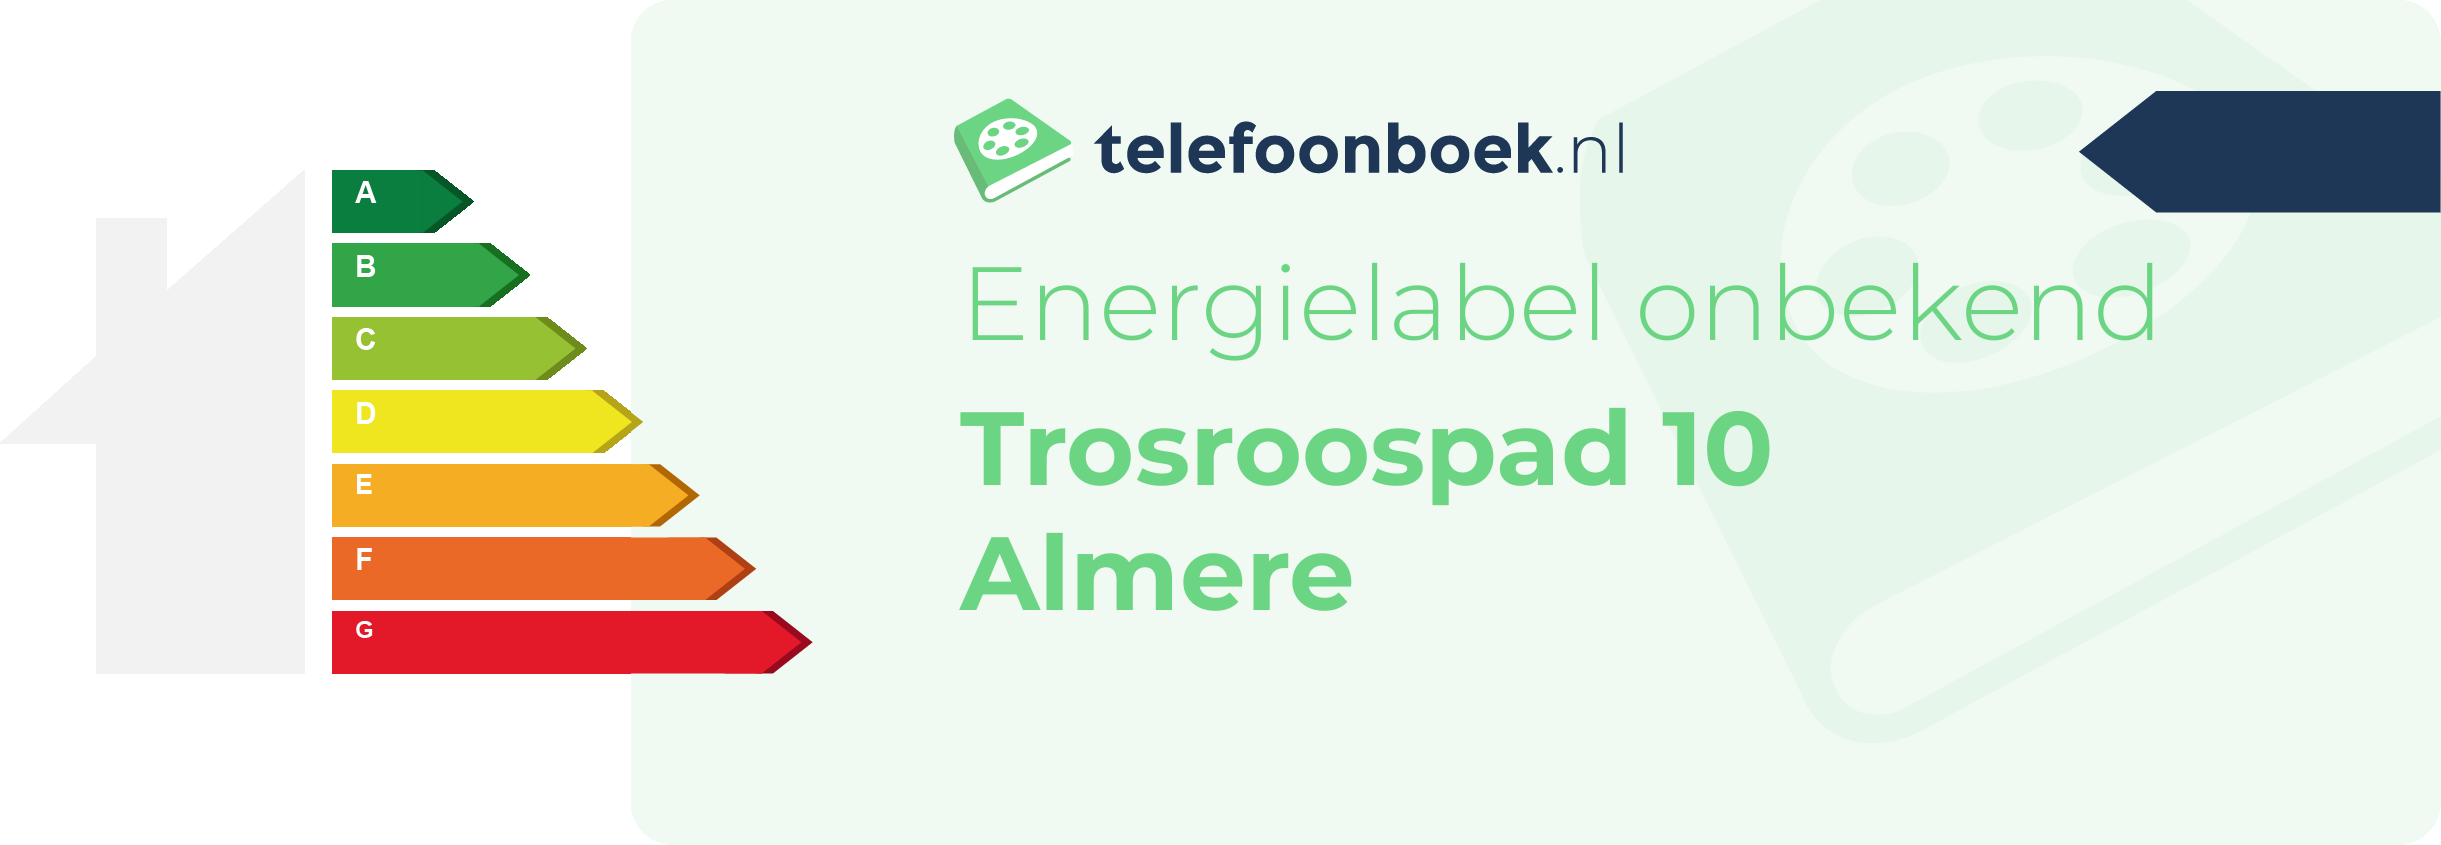 Energielabel Trosroospad 10 Almere